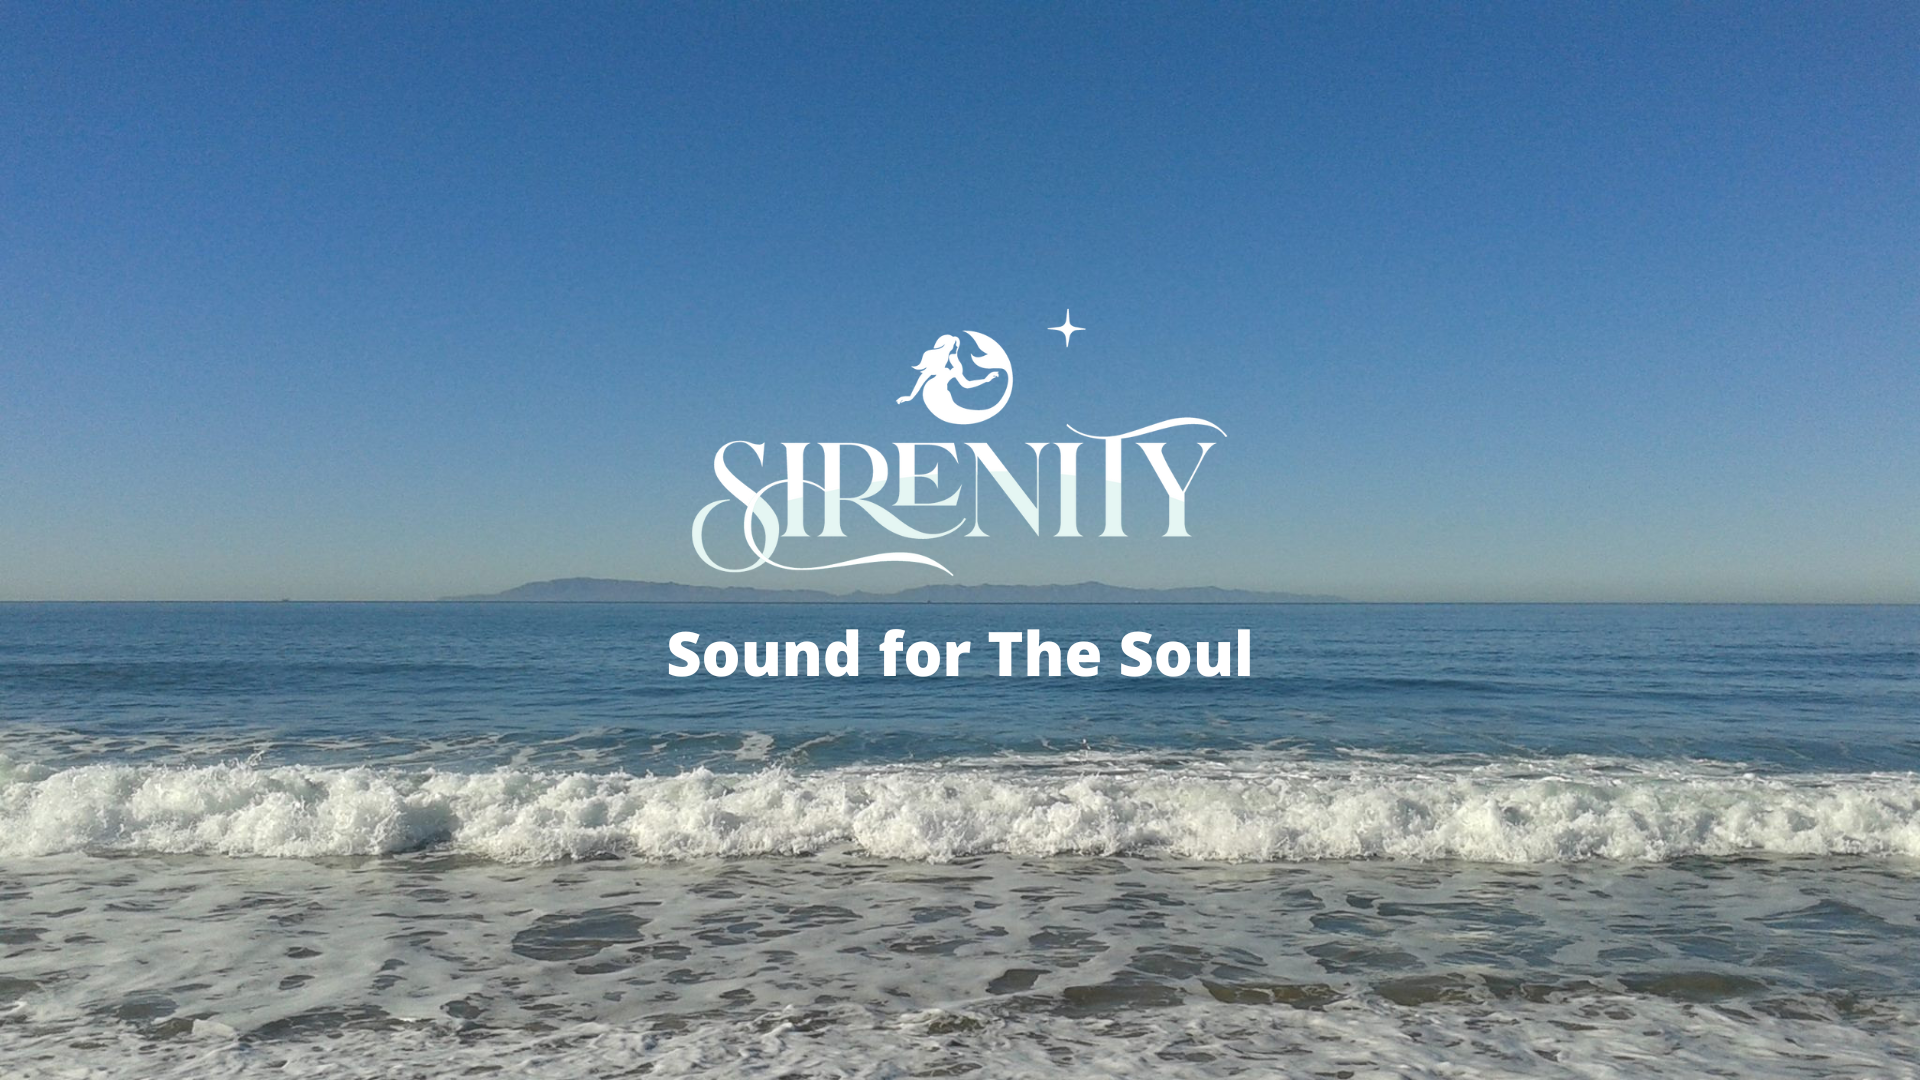 www.sirenity.co.uk